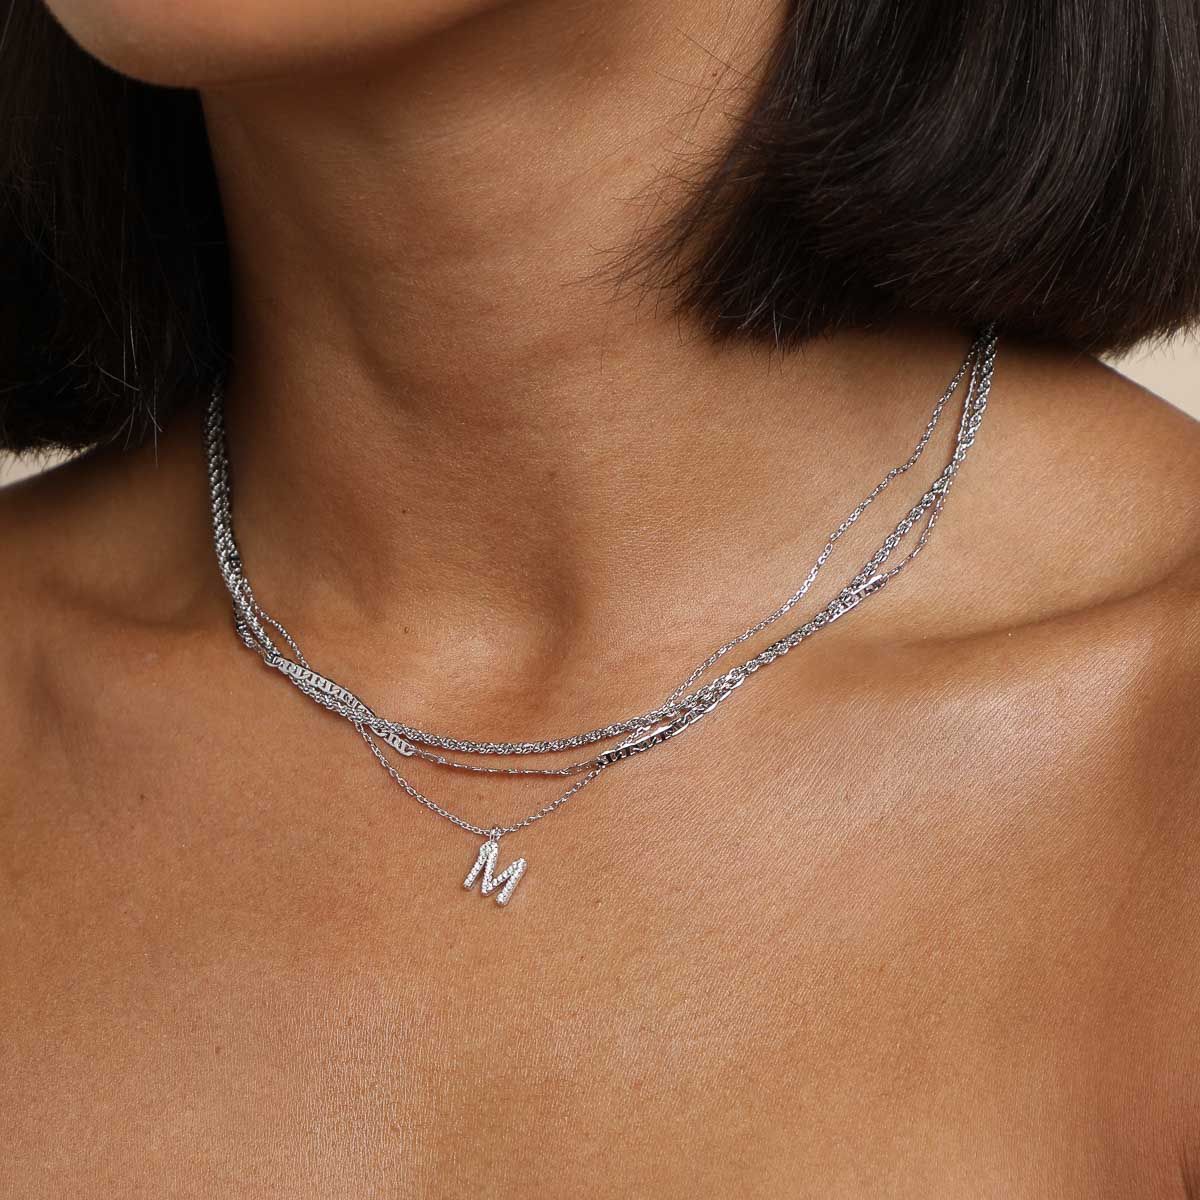 Personalised diamond cuban letters pendant necklace